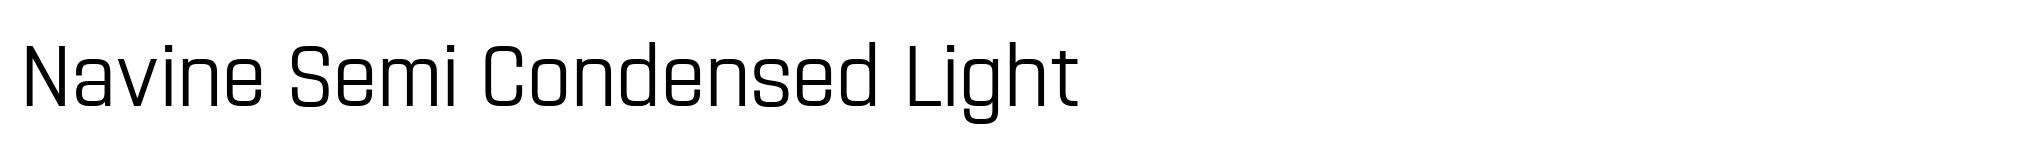 Navine Semi Condensed Light image